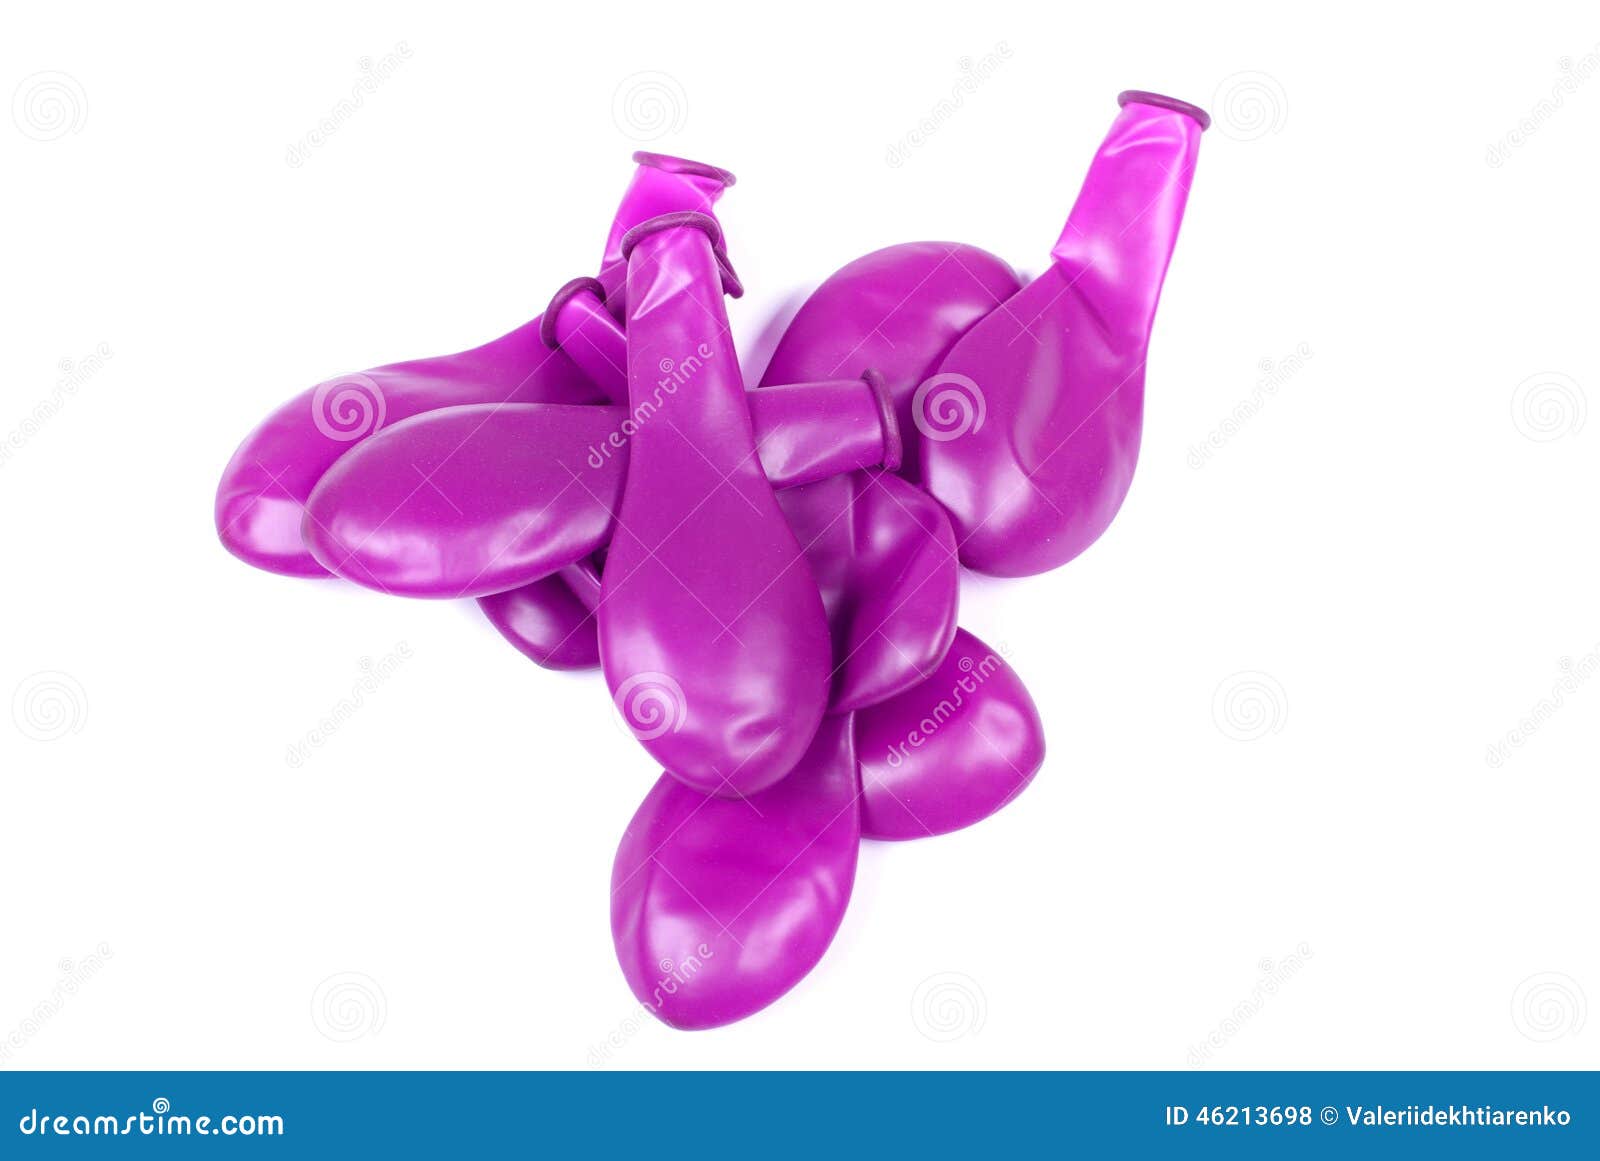 deflated balloon clip art - photo #28